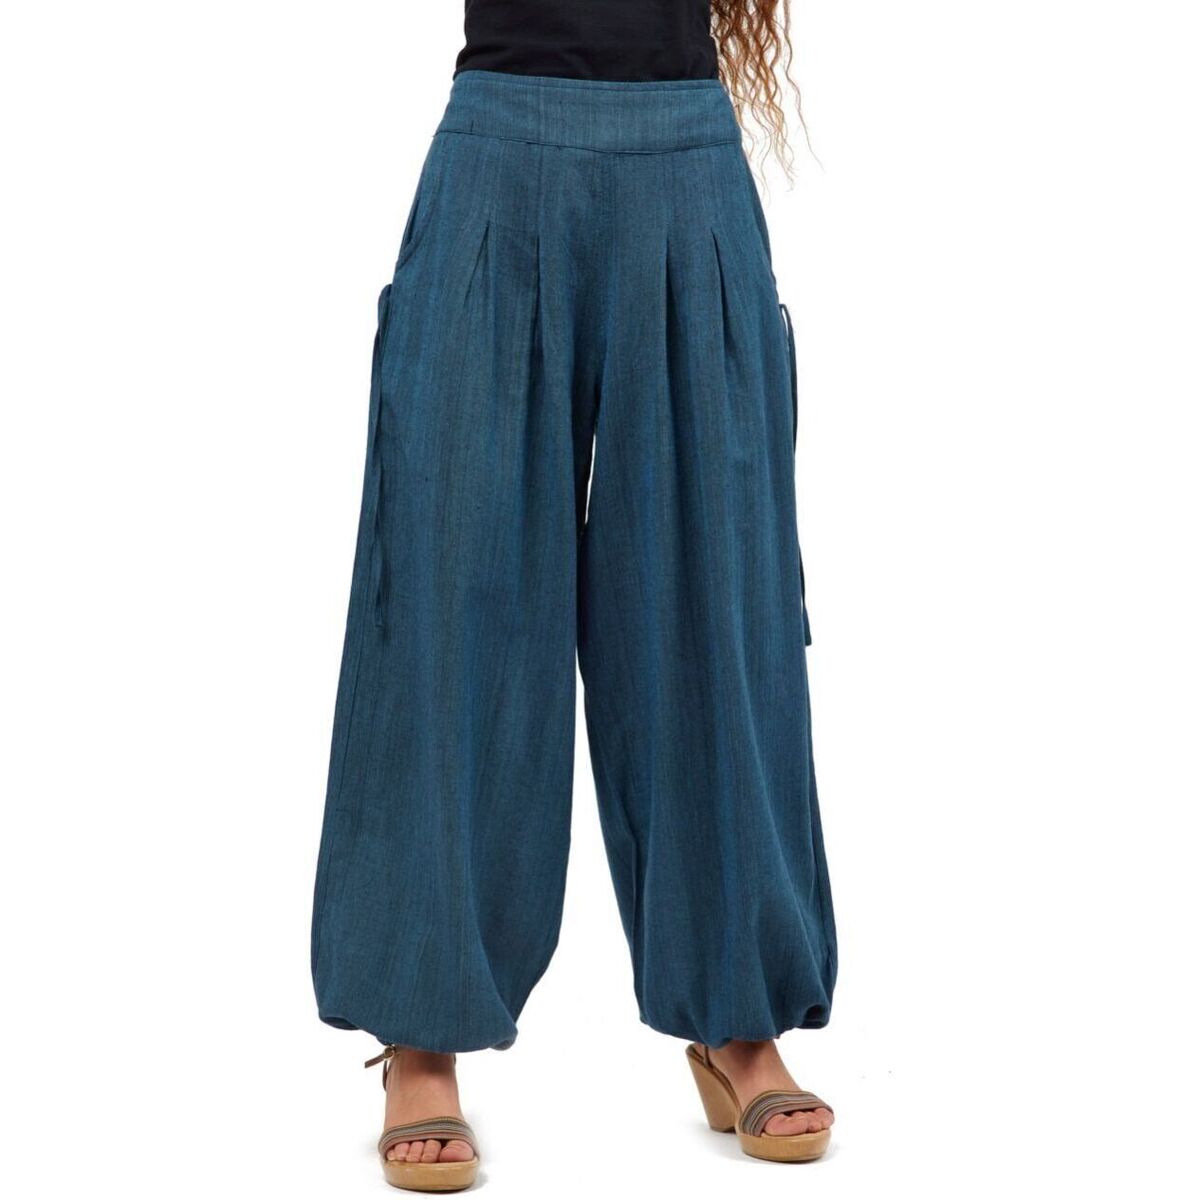 Fantazia Bleu Pantalon aladdin ethnique femme Tilah QH3RENIw